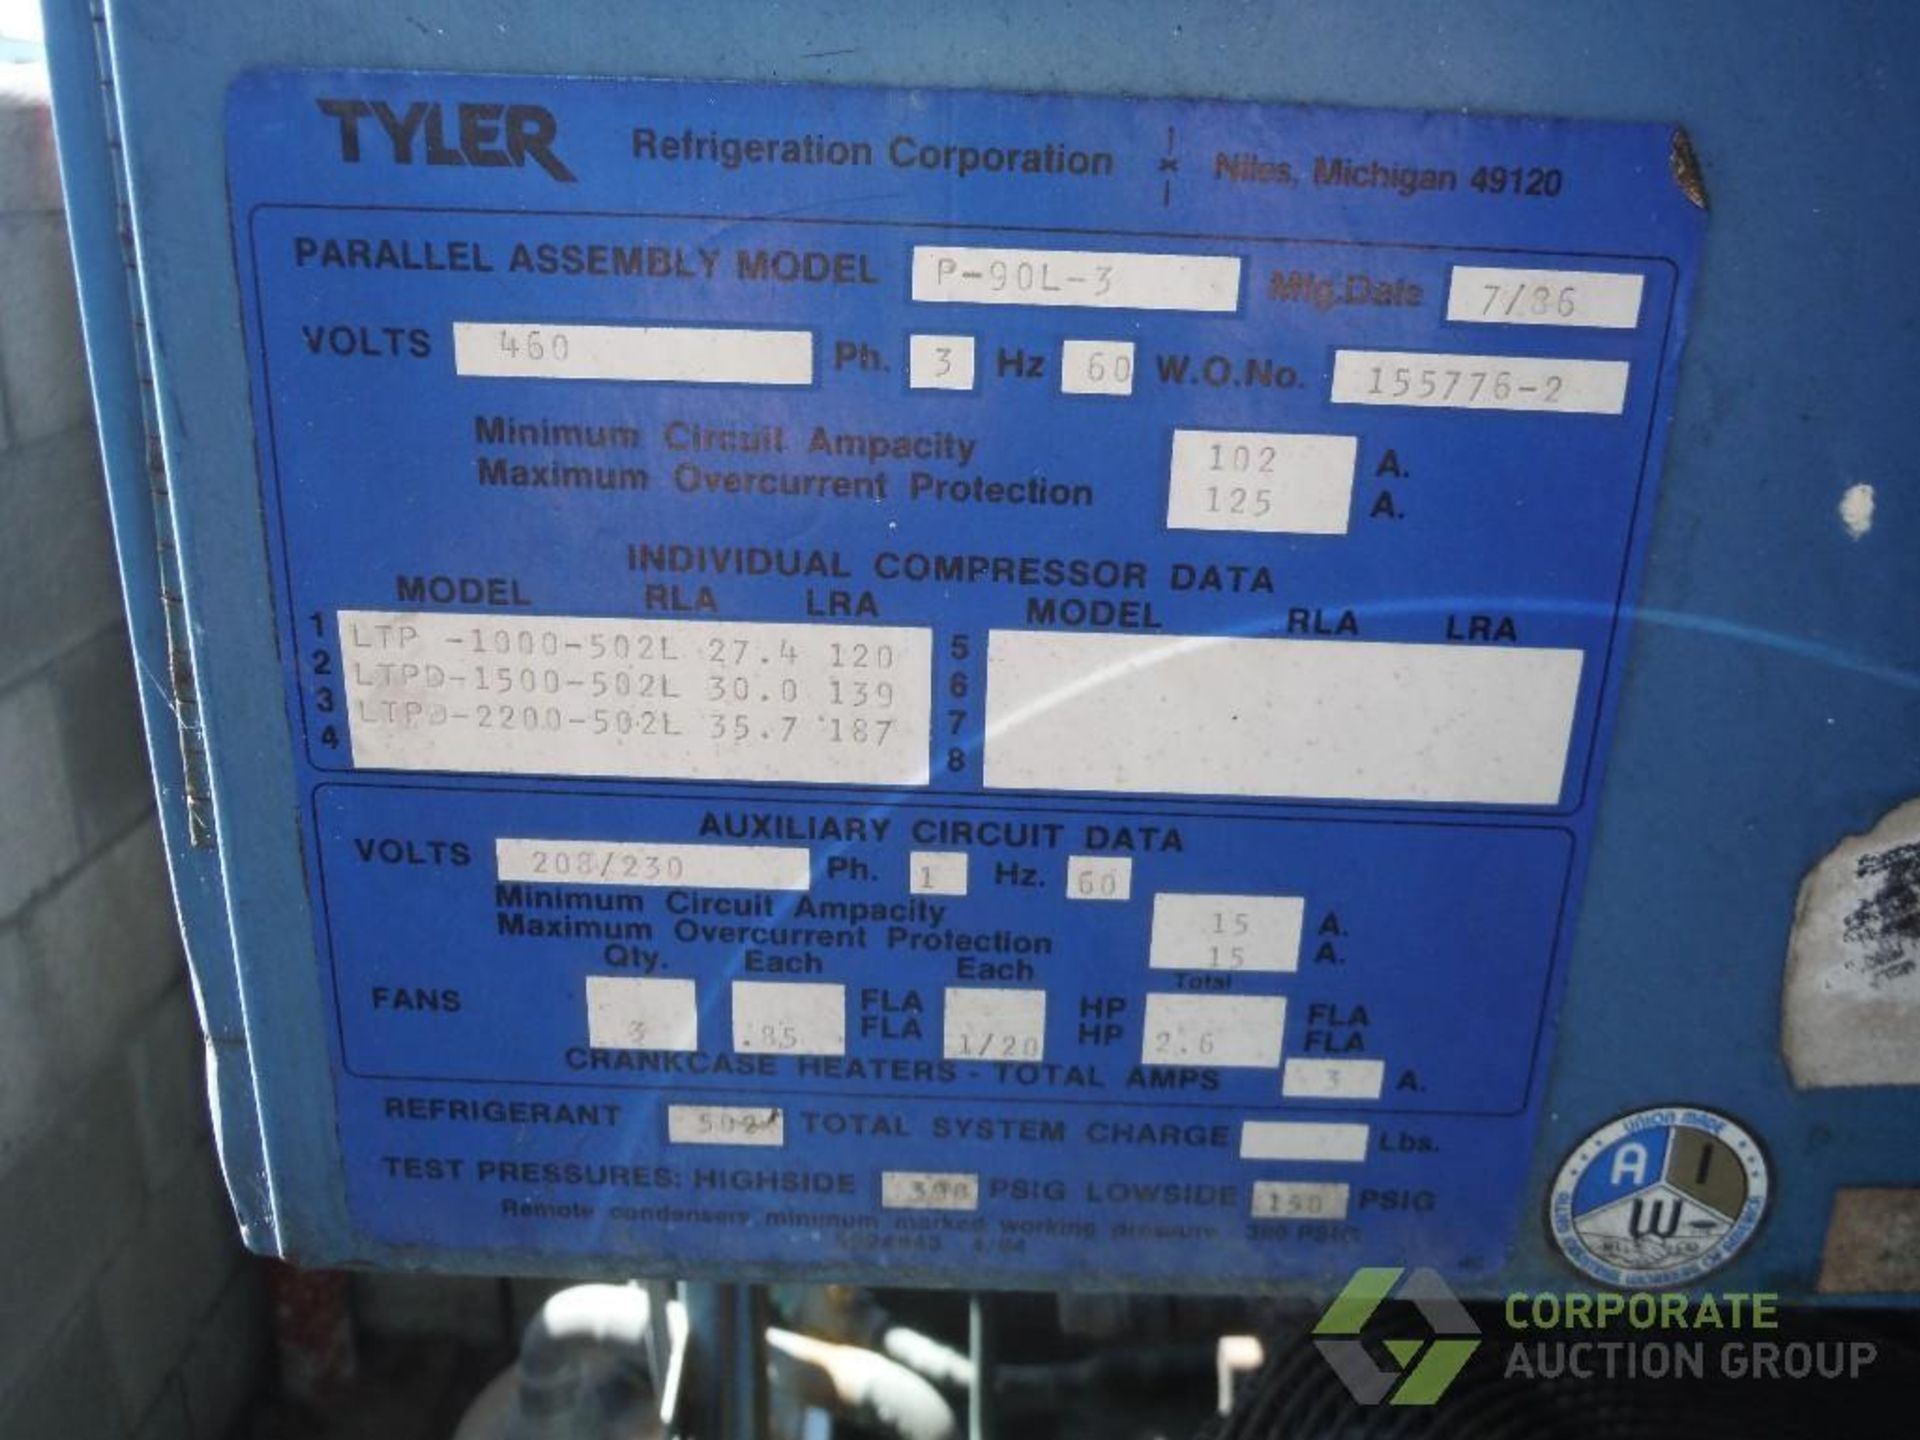 1986 Tyler ammonia compressor, Model P90L-3, R-404A - Image 8 of 10